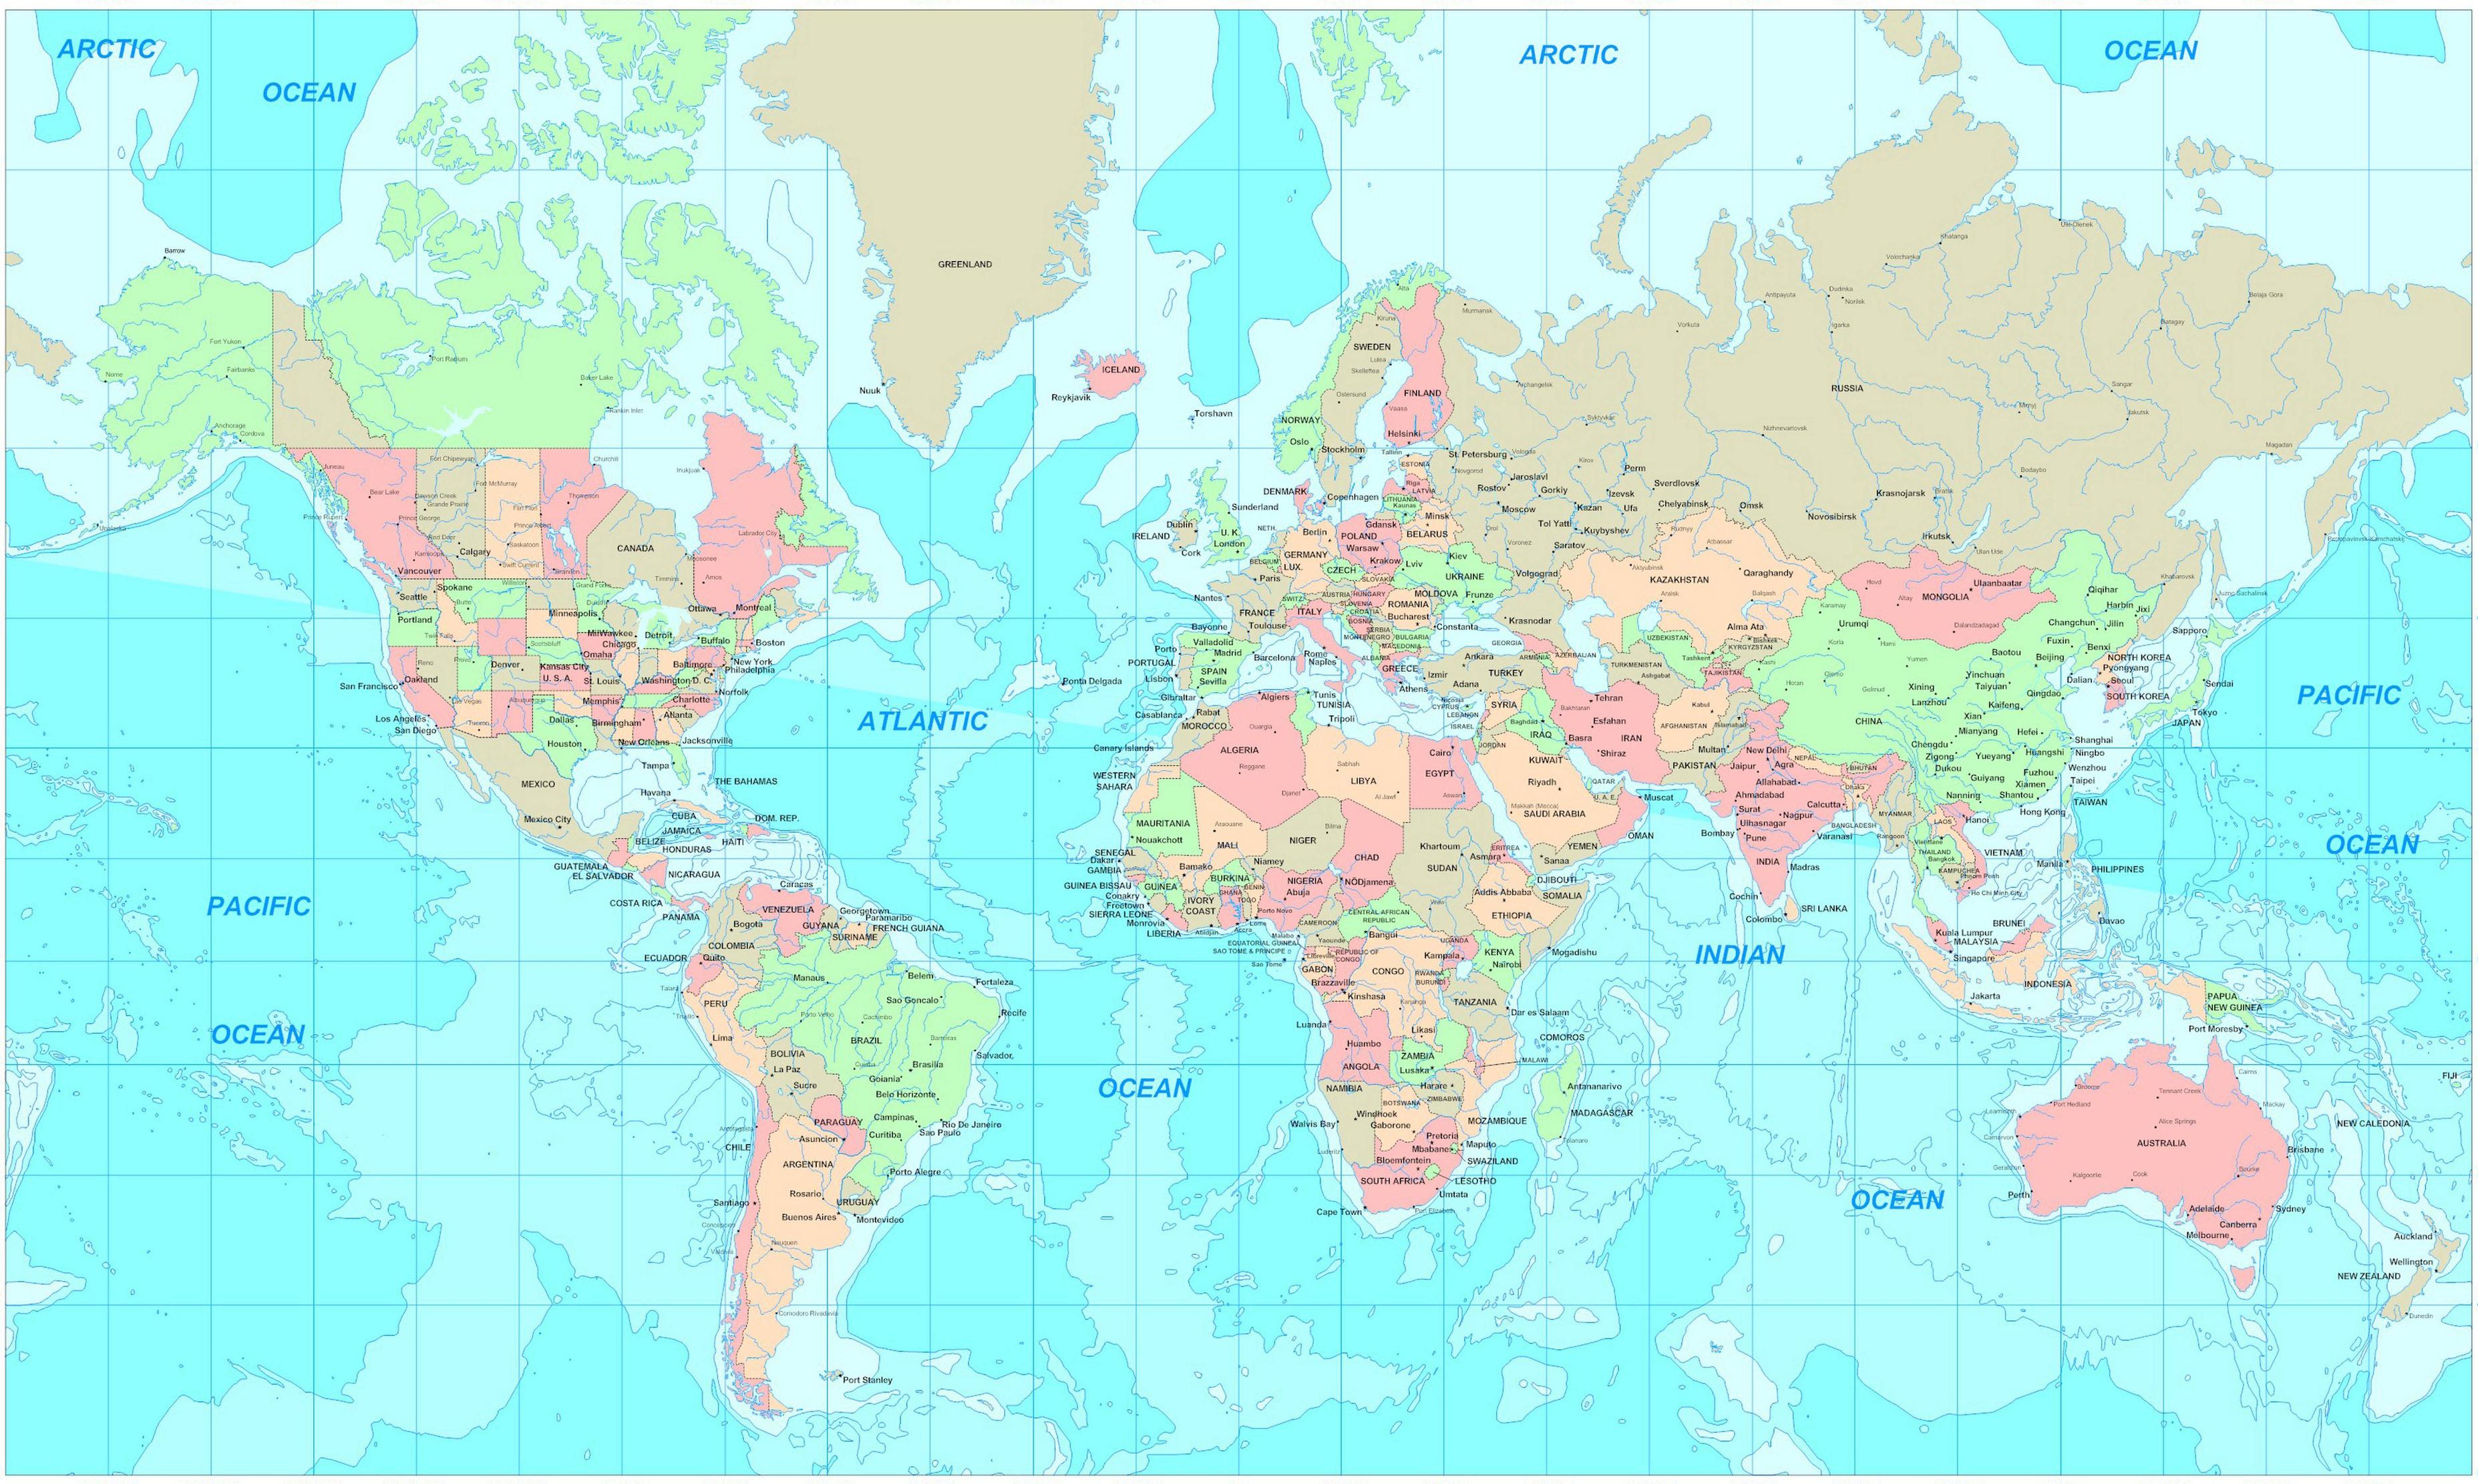 World Map Desktop Background